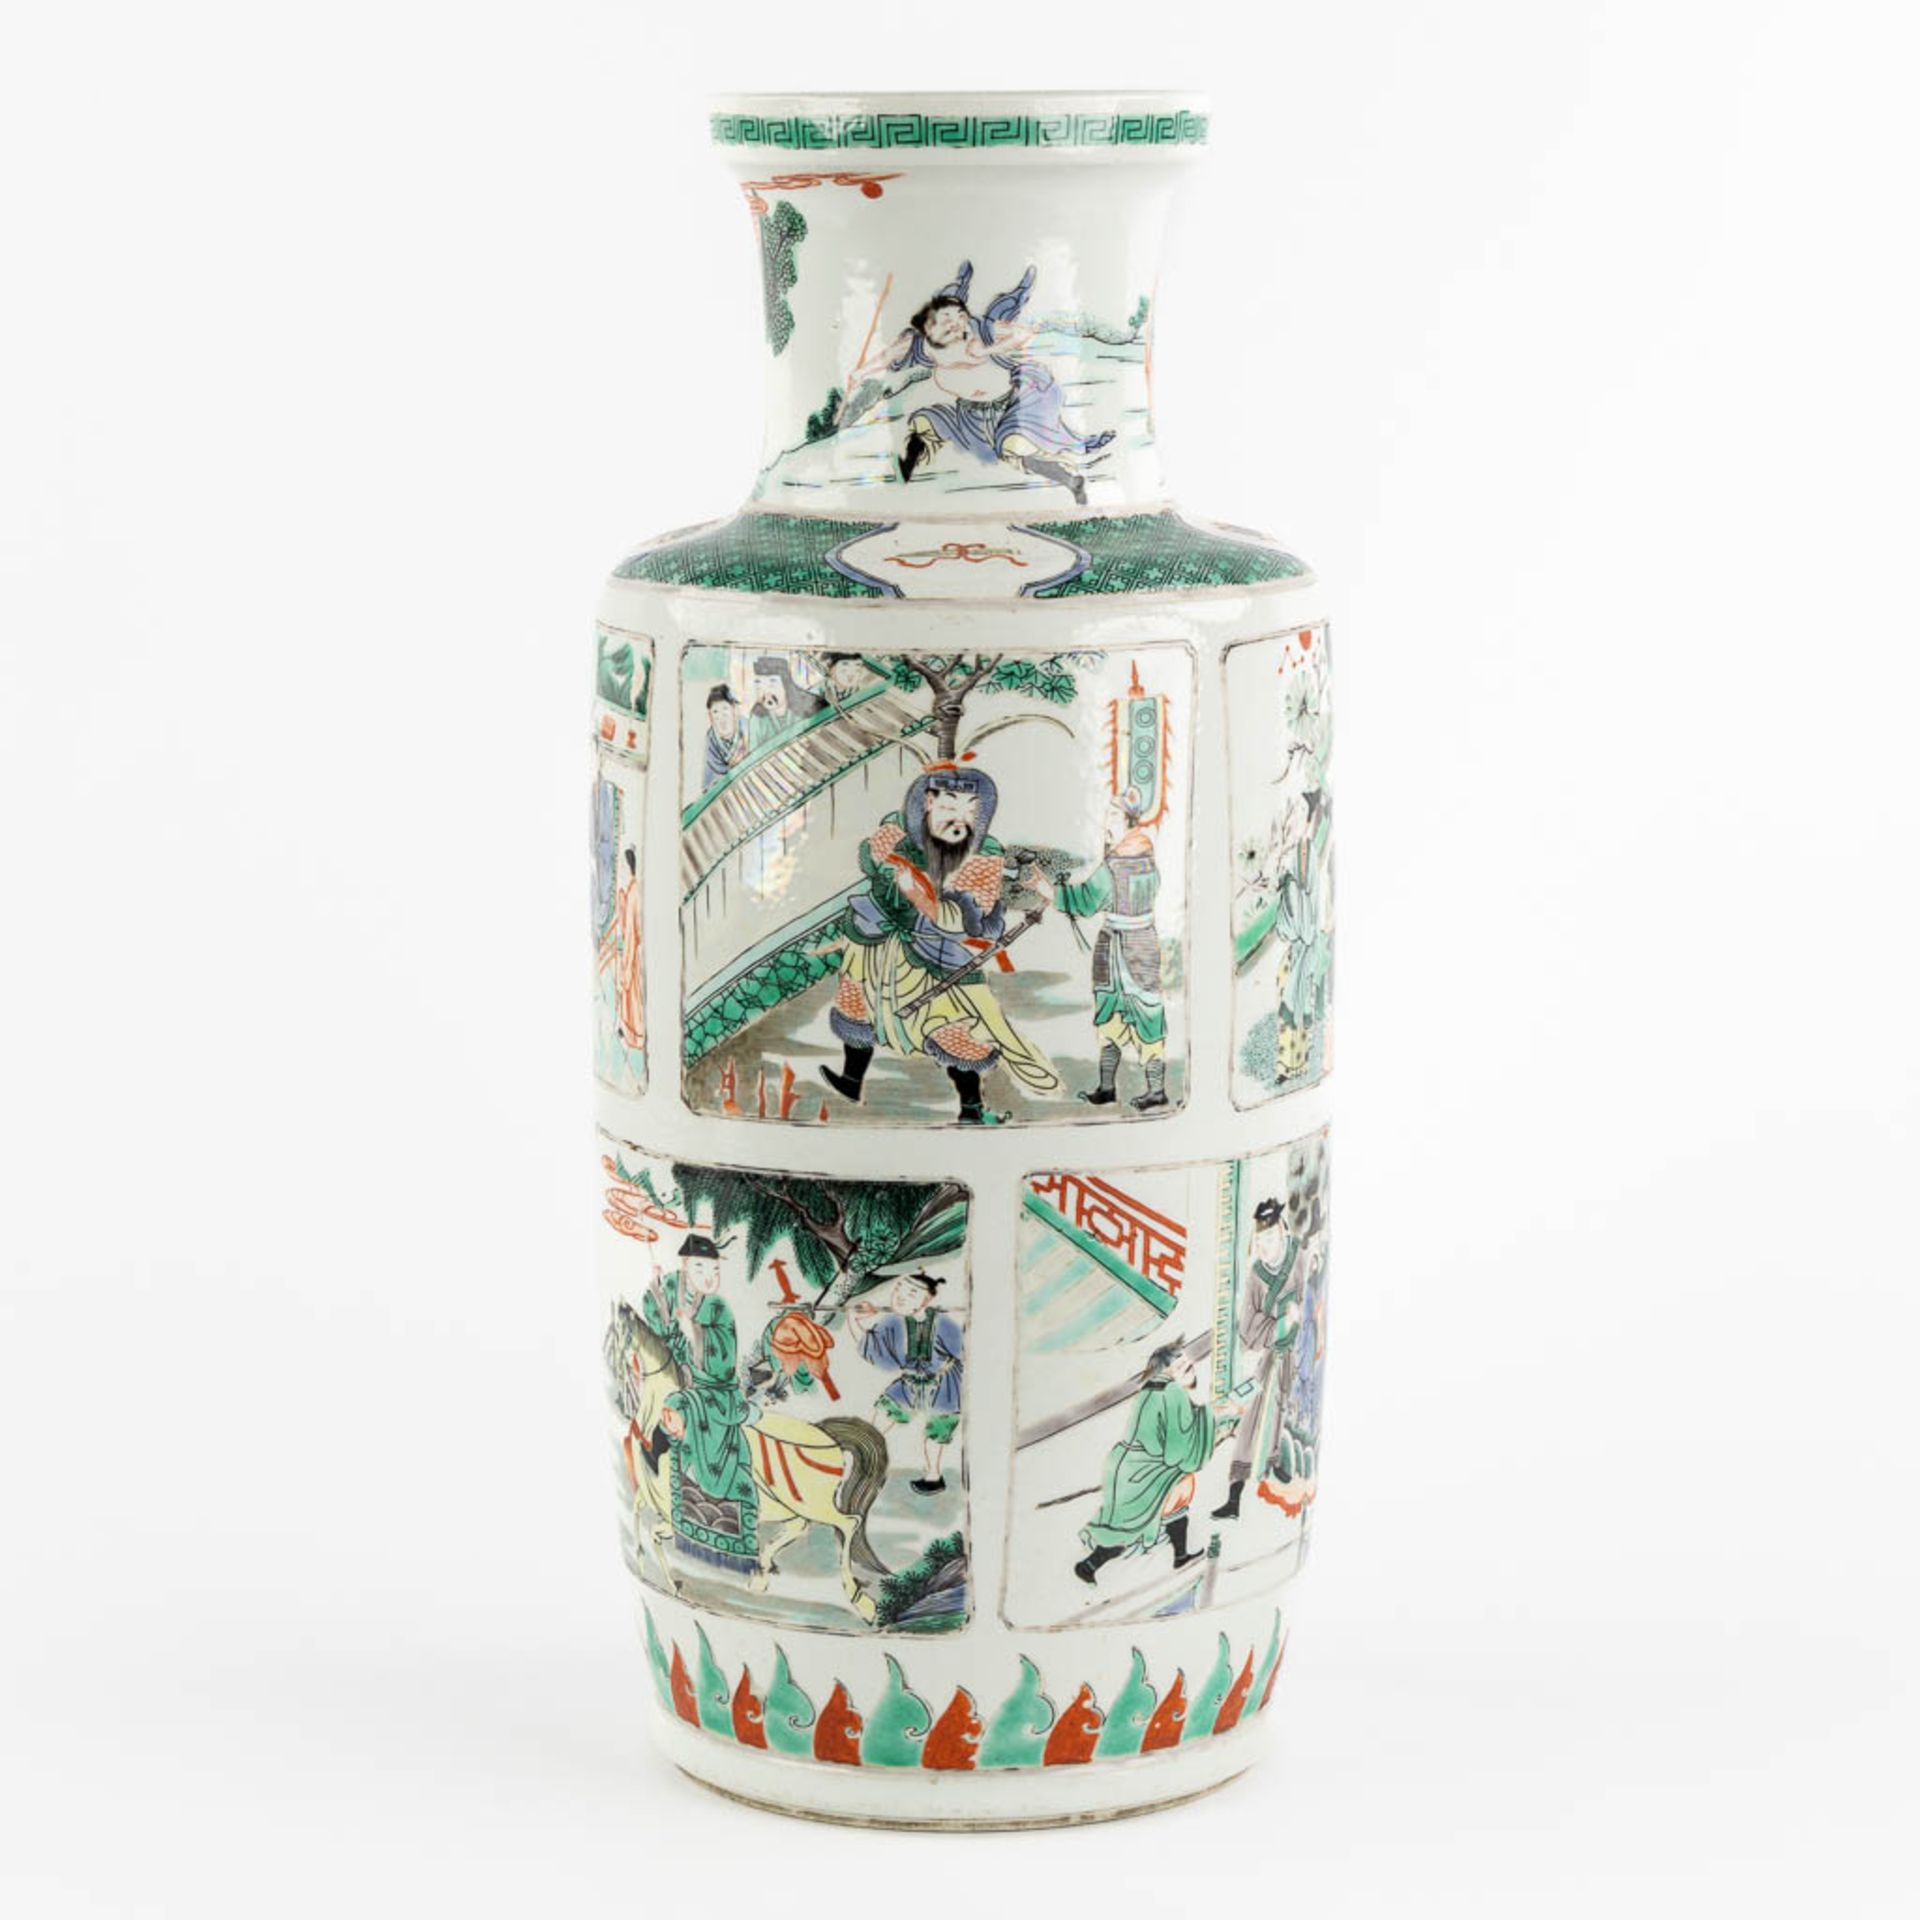 A Chinese Famille Verte vase, 'Roulleau' vase. Kangxi mark. (H:46 x D:20 cm)